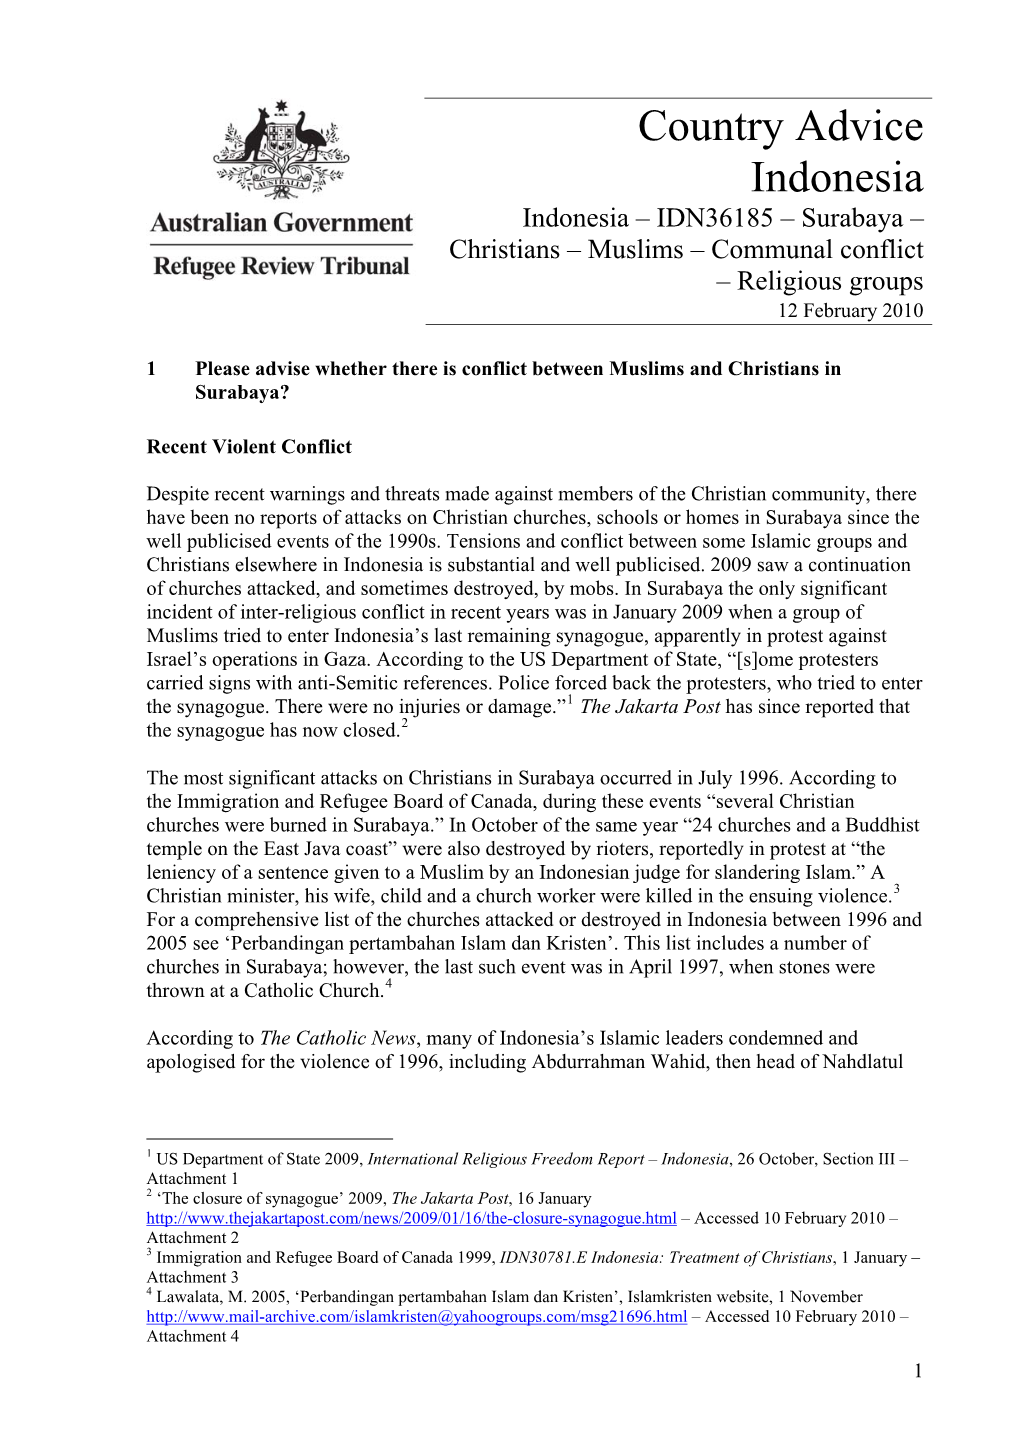 Surabaya – Christians – Muslims – Communal Conflict – Religious Groups 12 February 2010